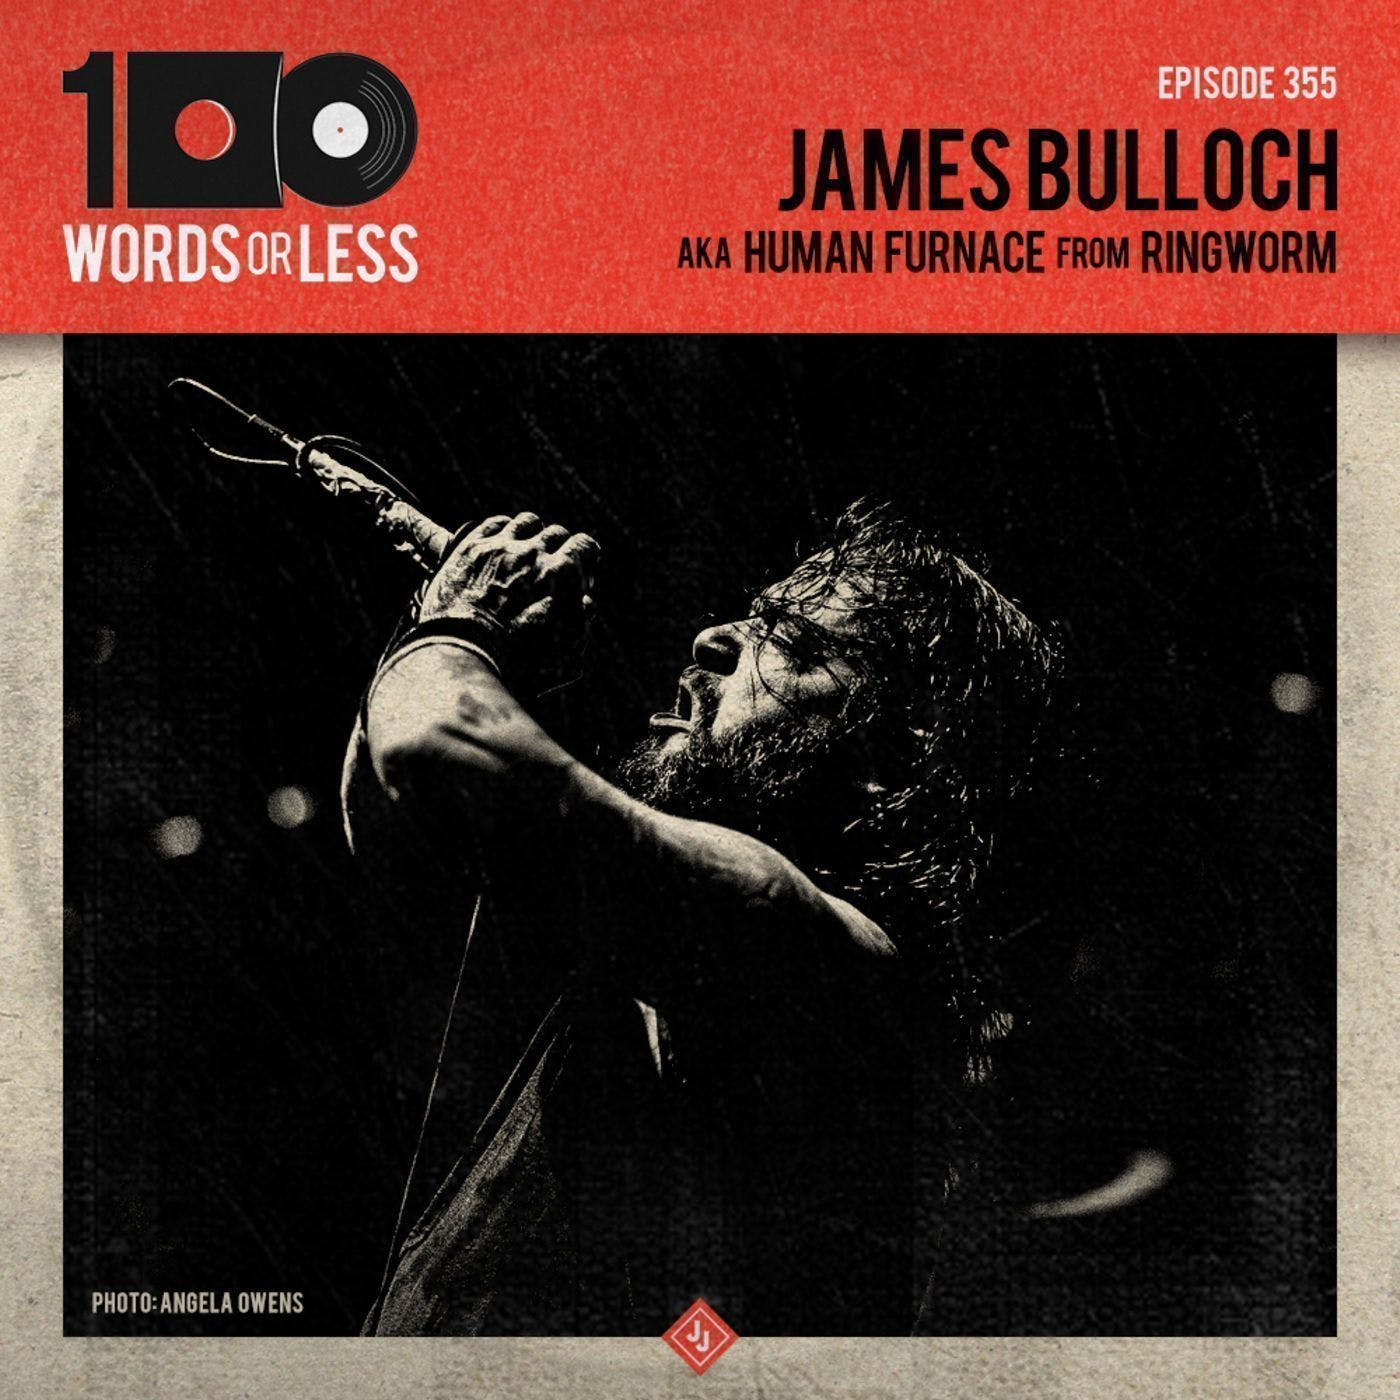 James Bulloch aka Human Furnace from Ringworm